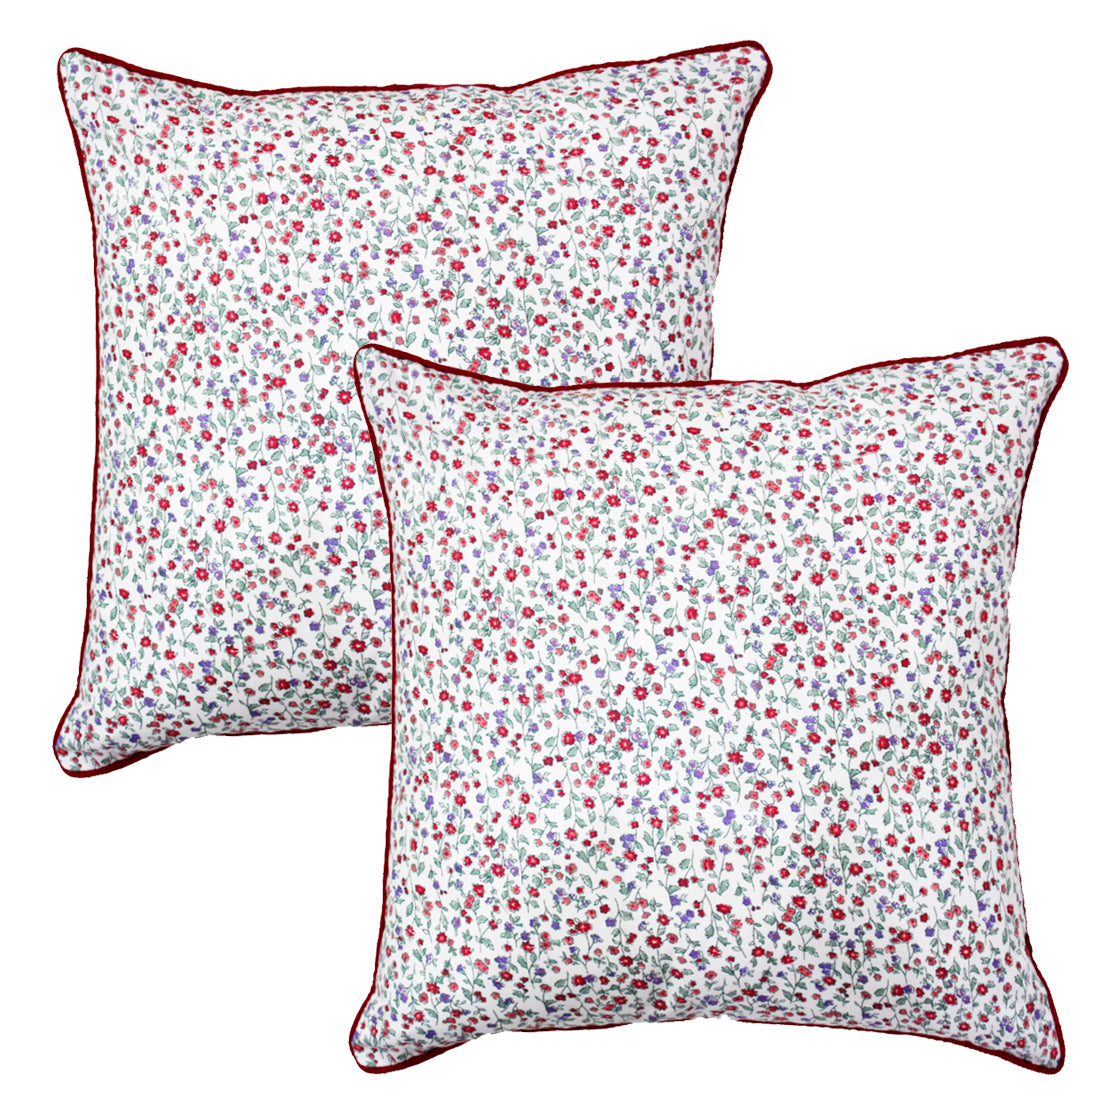 Quartz Printed Floral Cotton Cushion Cover - Red